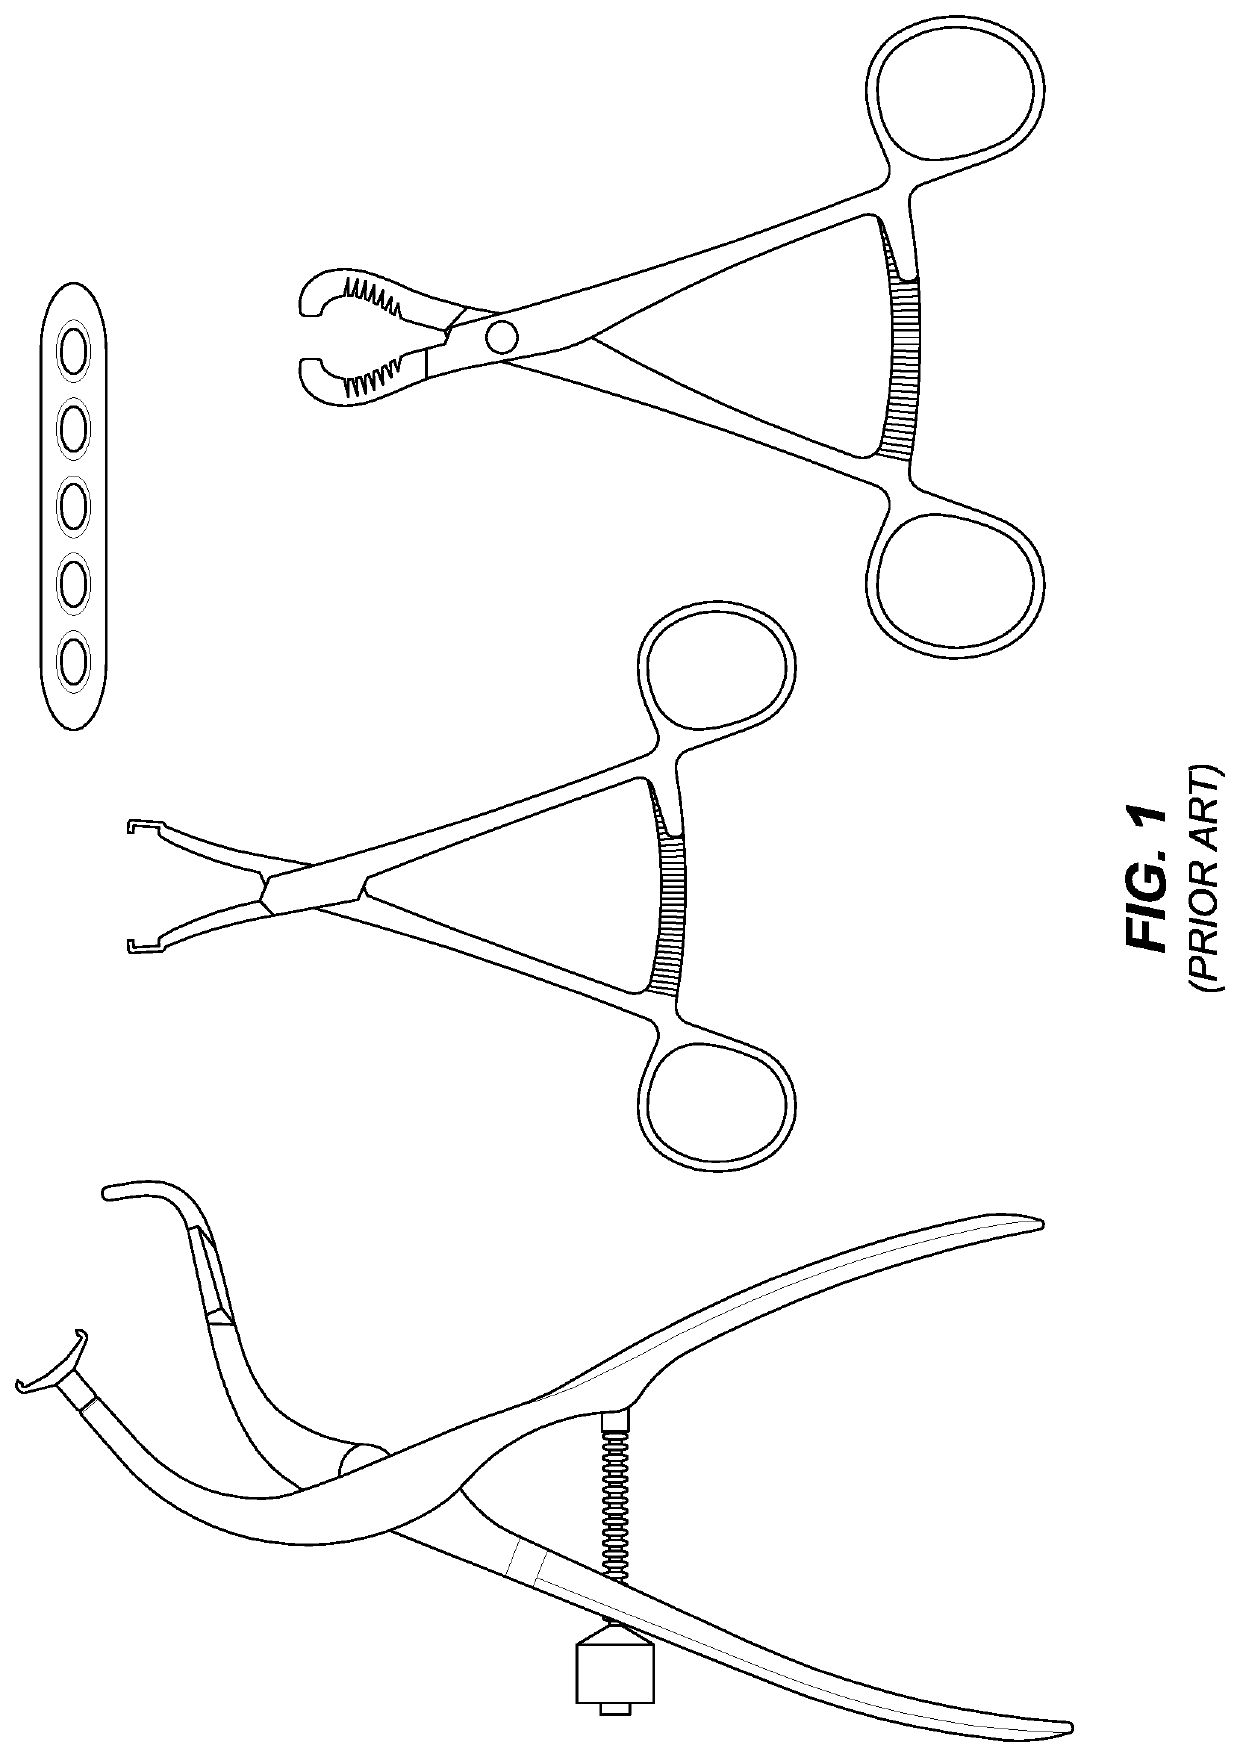 Modular orthopedic clamps